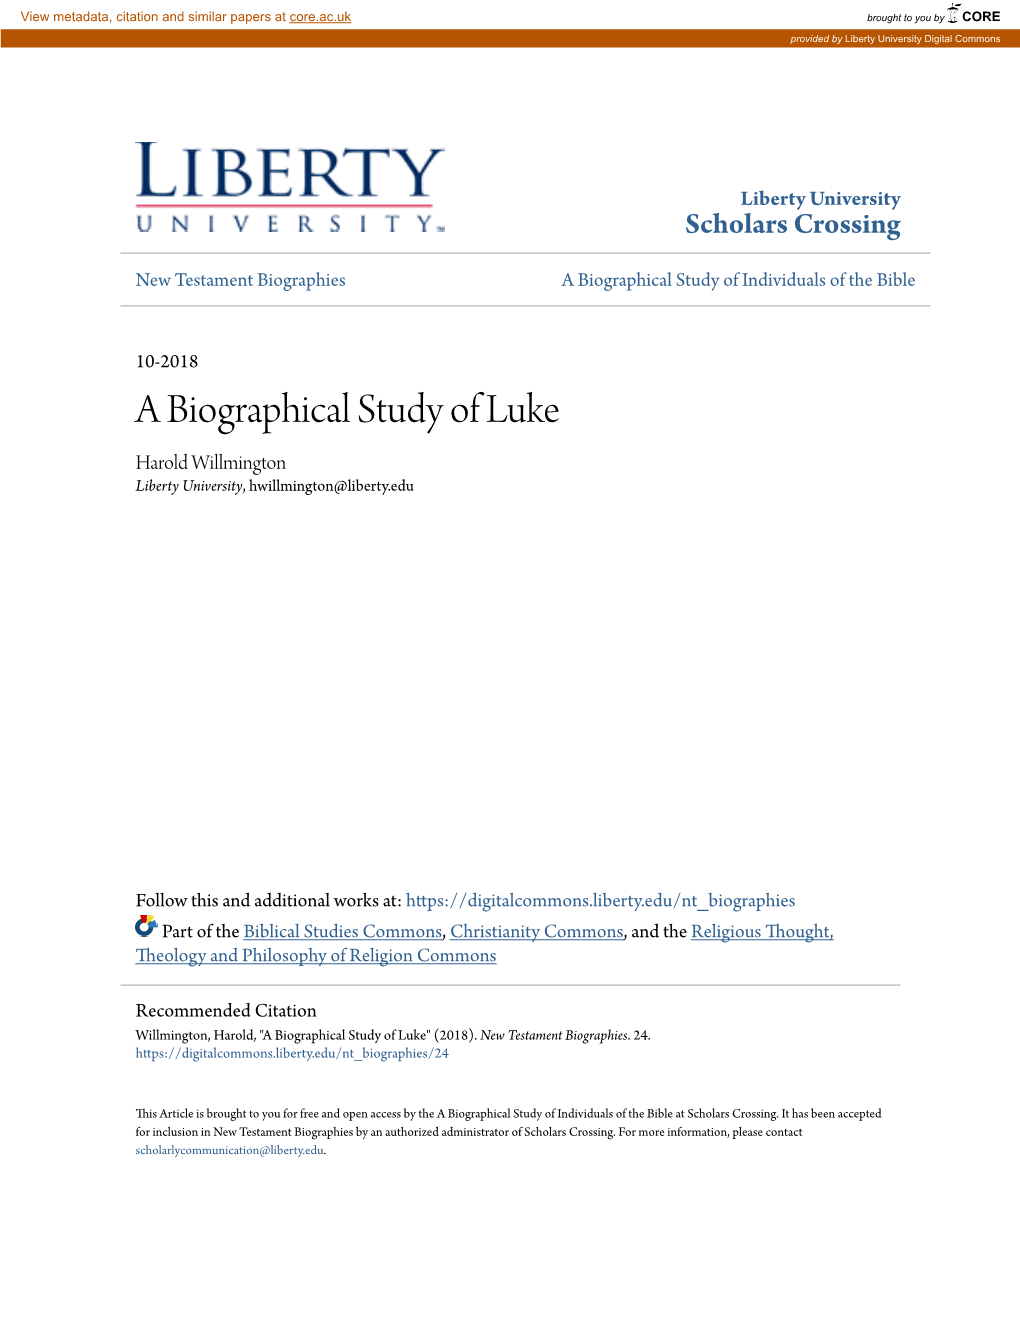 A Biographical Study of Luke Harold Willmington Liberty University, Hwillmington@Liberty.Edu